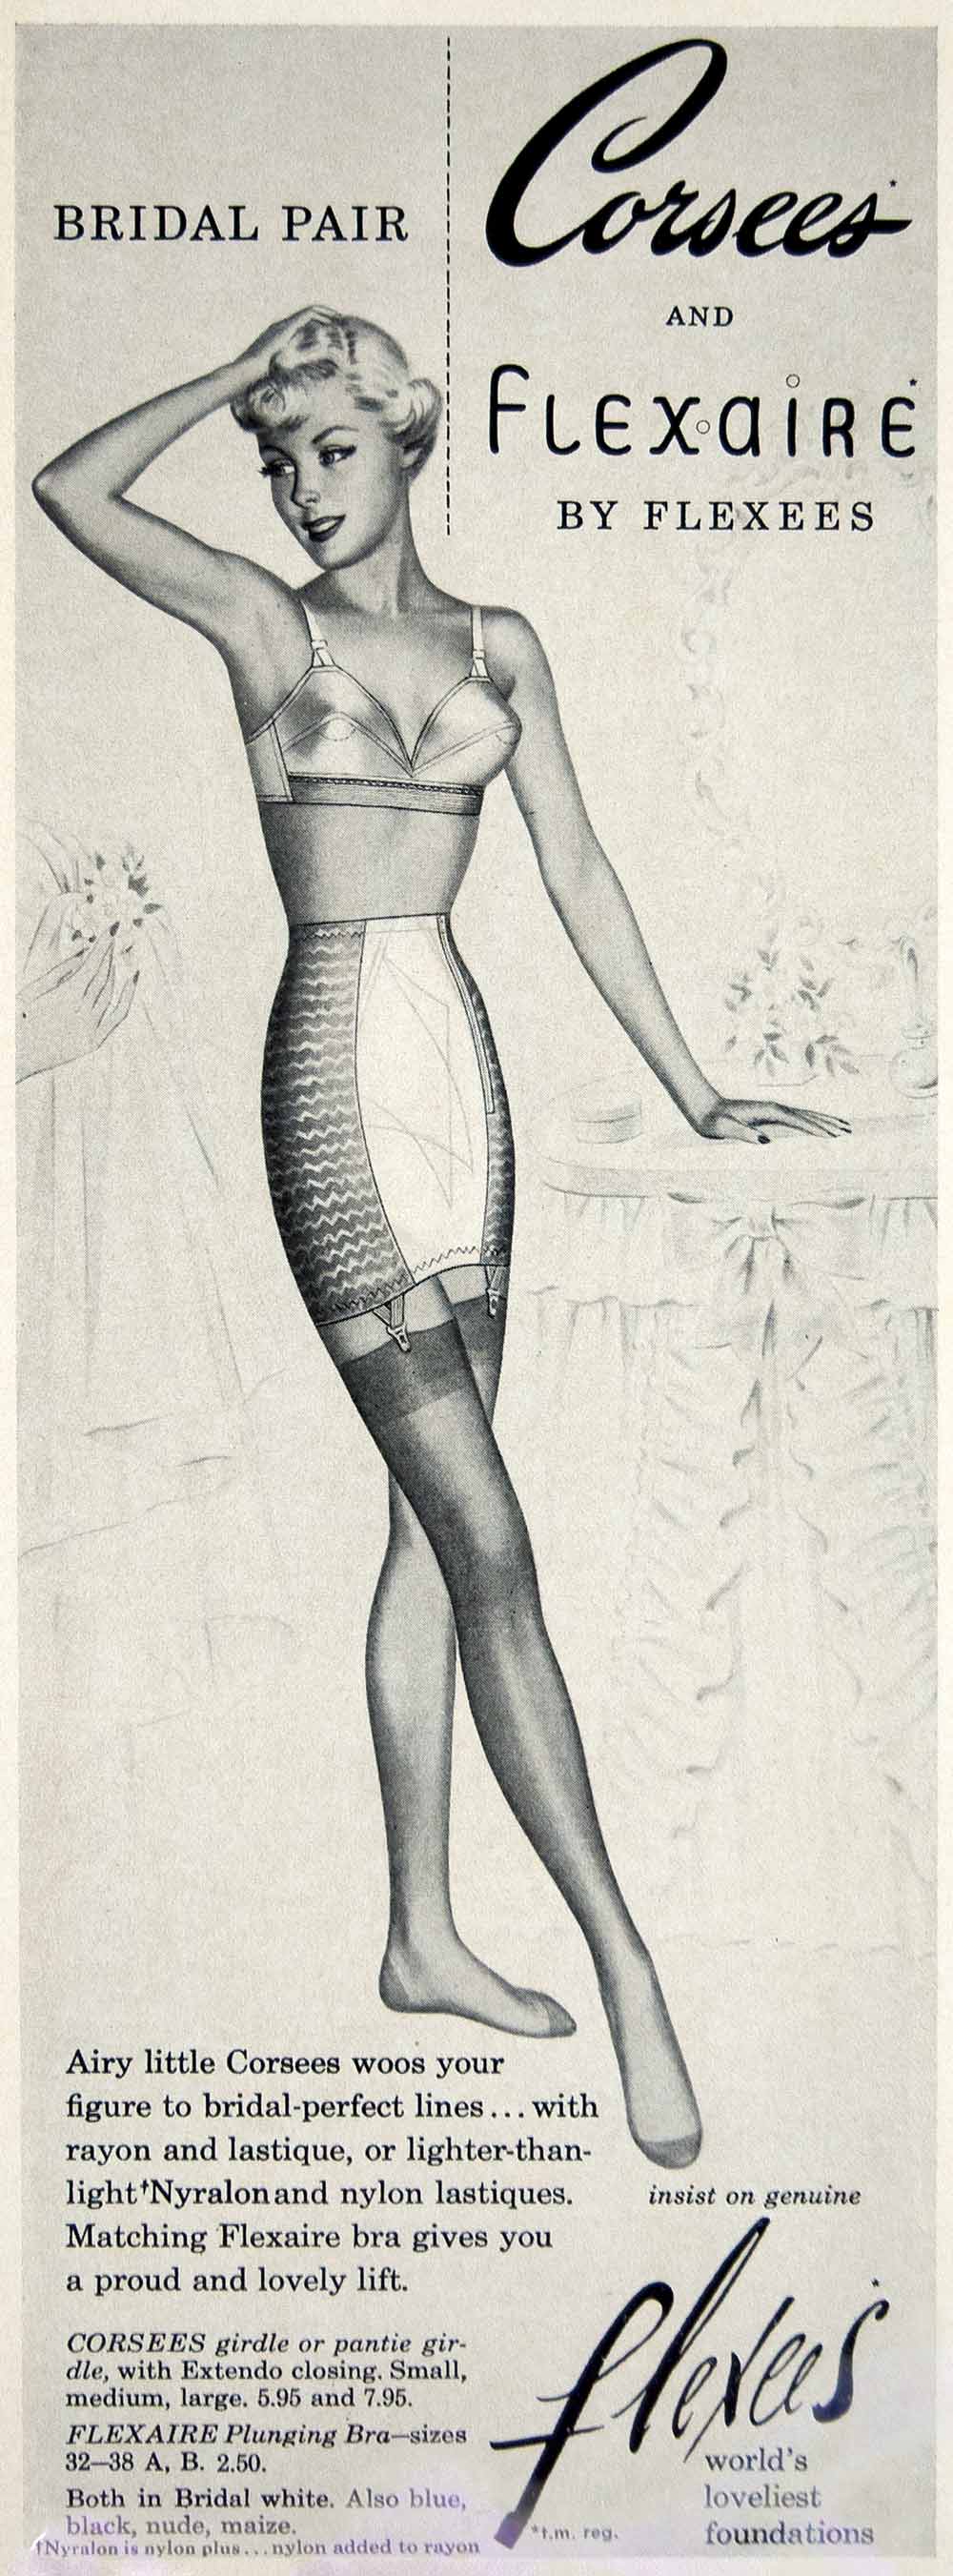 1949 Ad Vintage Flexees Corsees Girdle Flexaire Bra Lingerie Bride Bri –  Period Paper Historic Art LLC